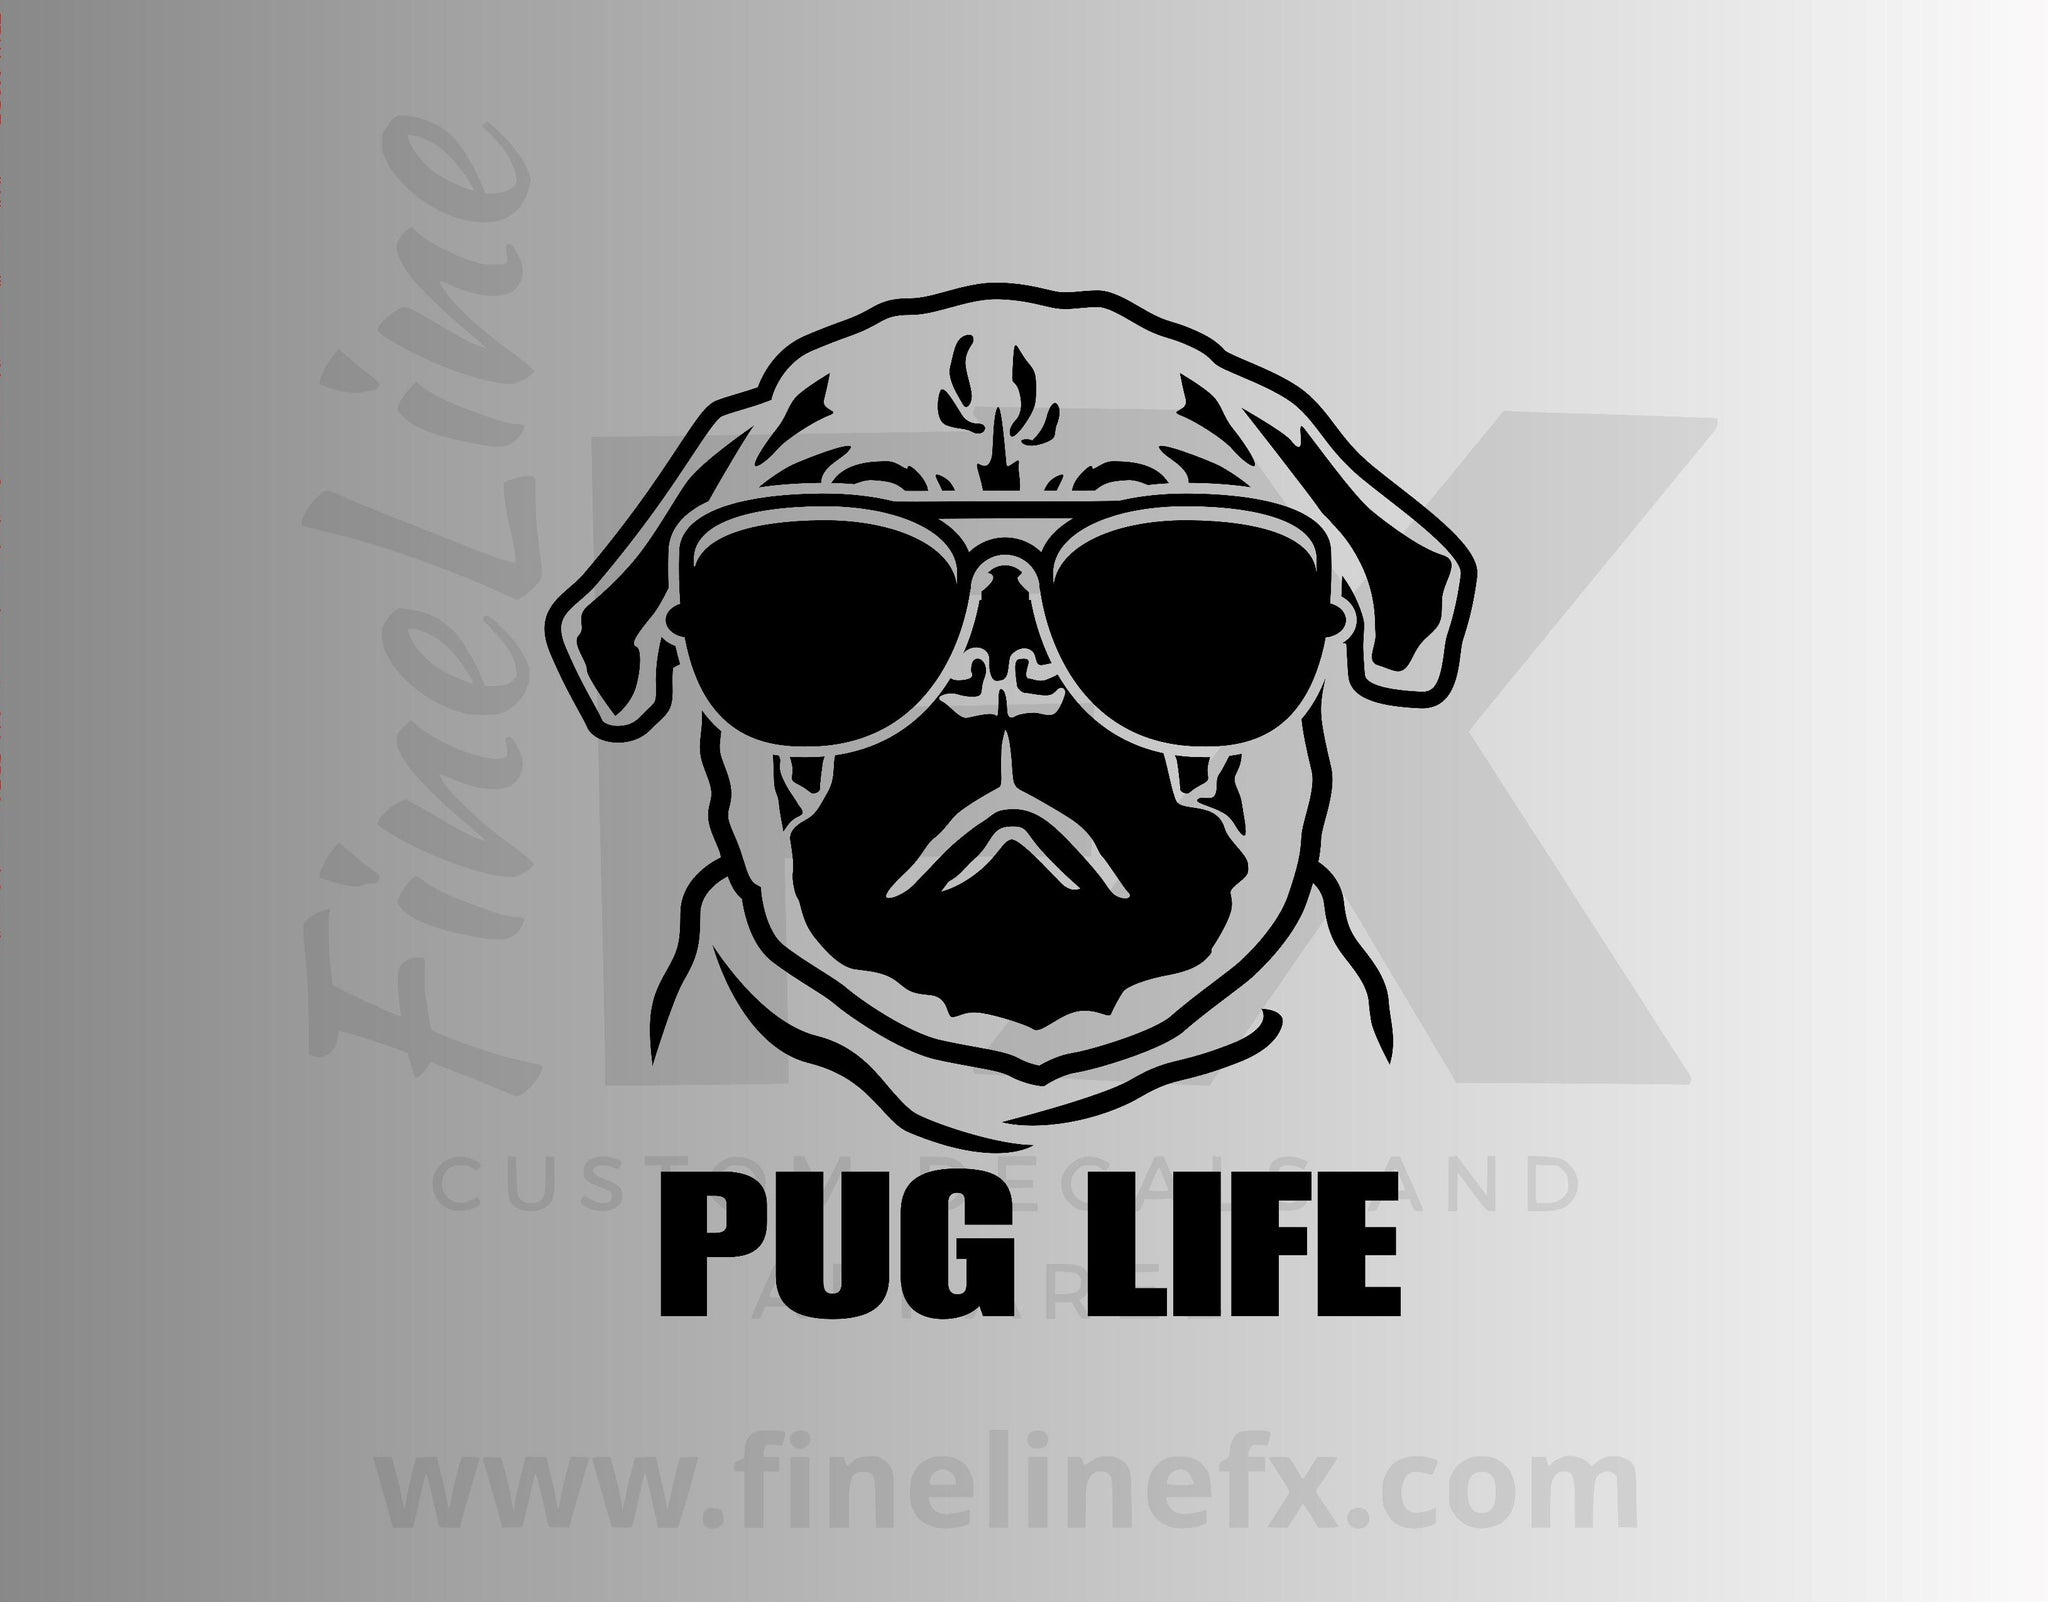 Download Pug Life Vinyl Decal Sticker